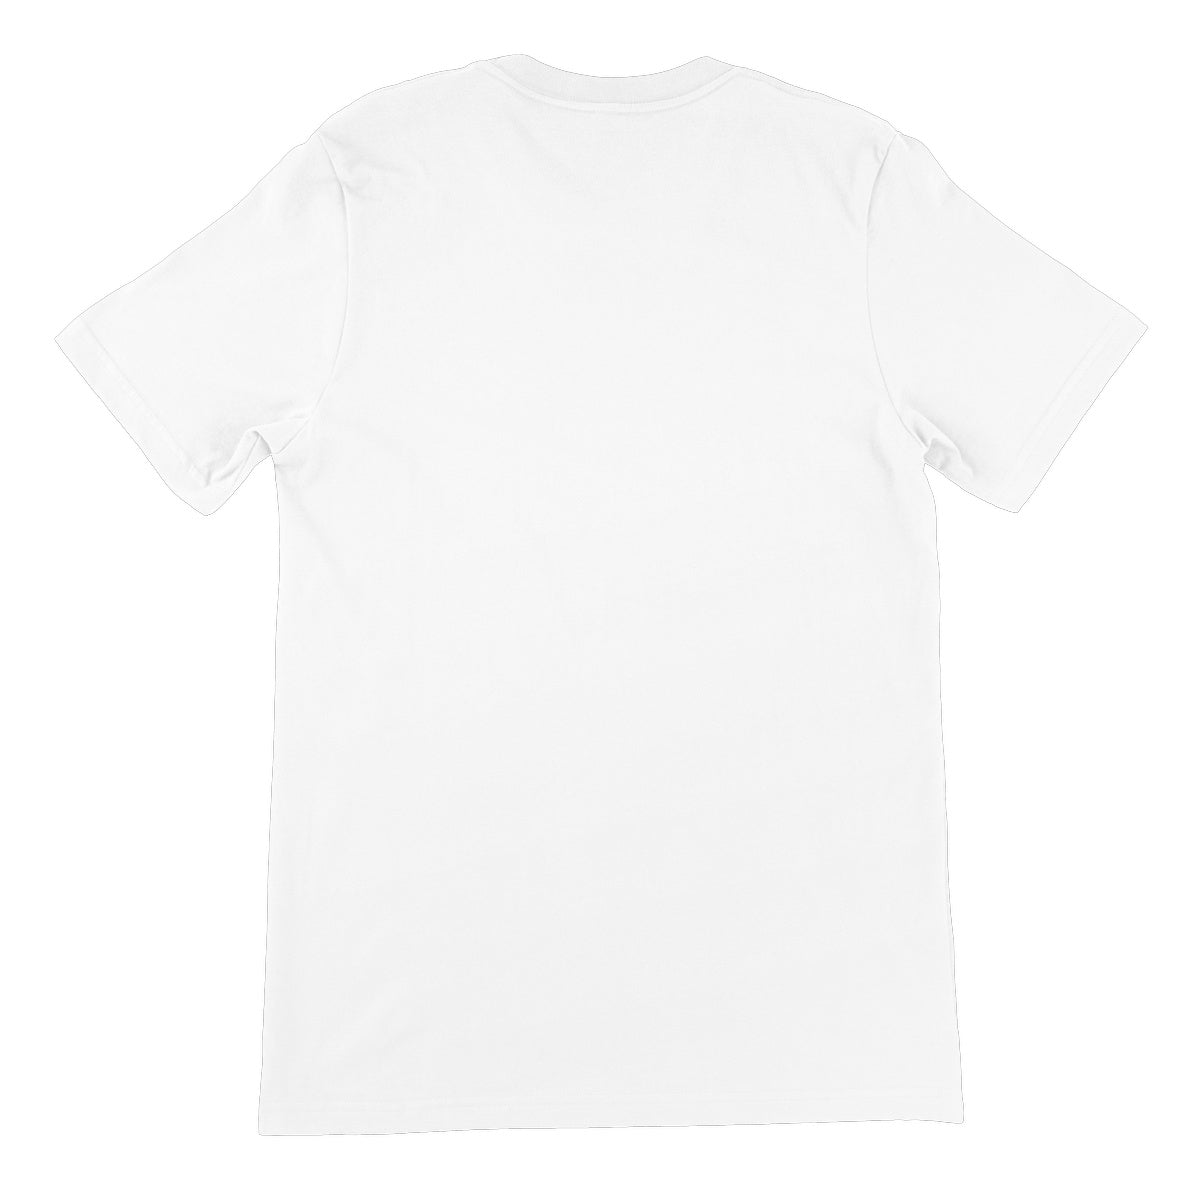 Rocket Illustrated Tee Unisex Short Sleeve T-Shirt